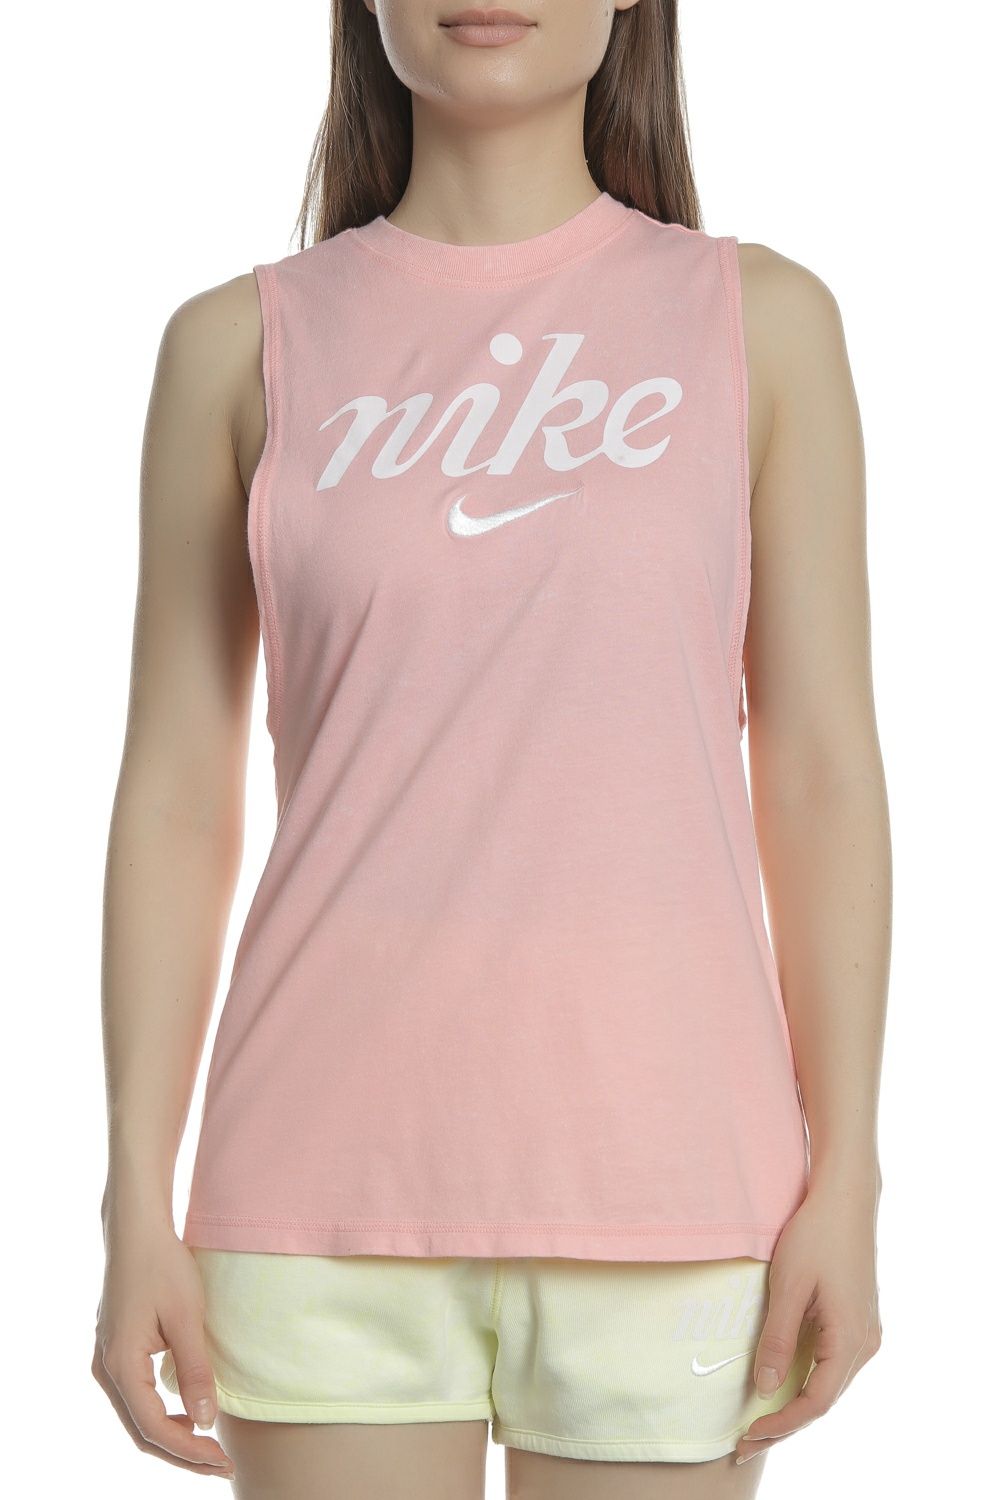 NIKE - Γυναικείο φανελάκι Nike Sportswear Tank κοραλί Γυναικεία/Ρούχα/Αθλητικά/T-shirt-Τοπ